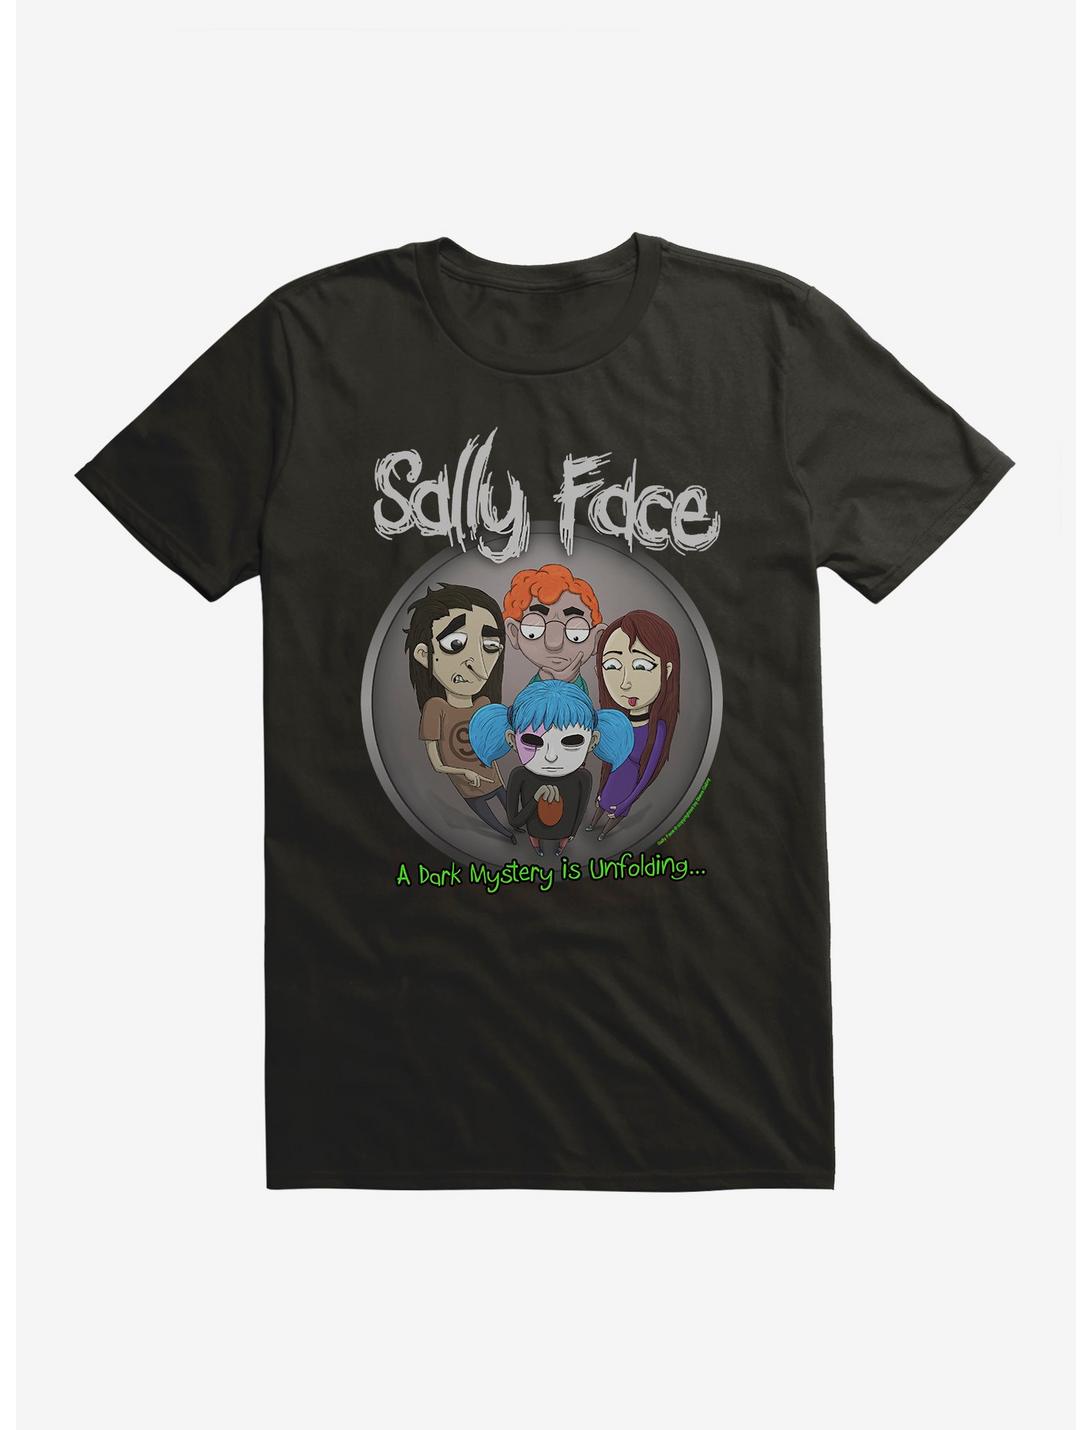 Sally Face Dark Mystery Unfolding Logo T-Shirt, BLACK, hi-res